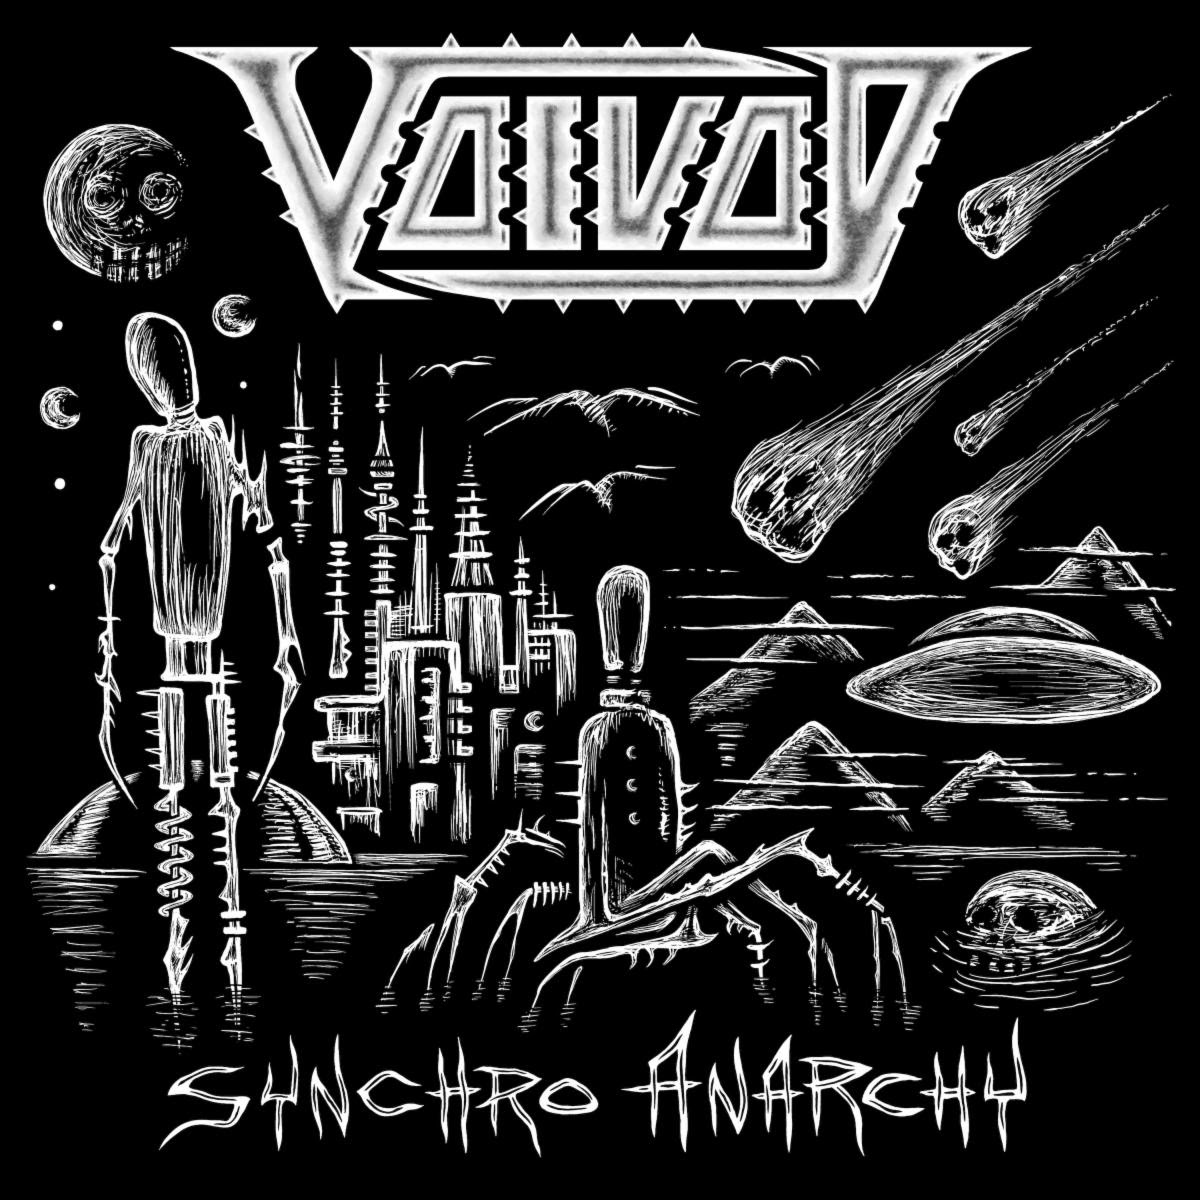 VOIVOD Announces New Studio Album 'Synchro Anarchy' – R o c k 'N' L o a d